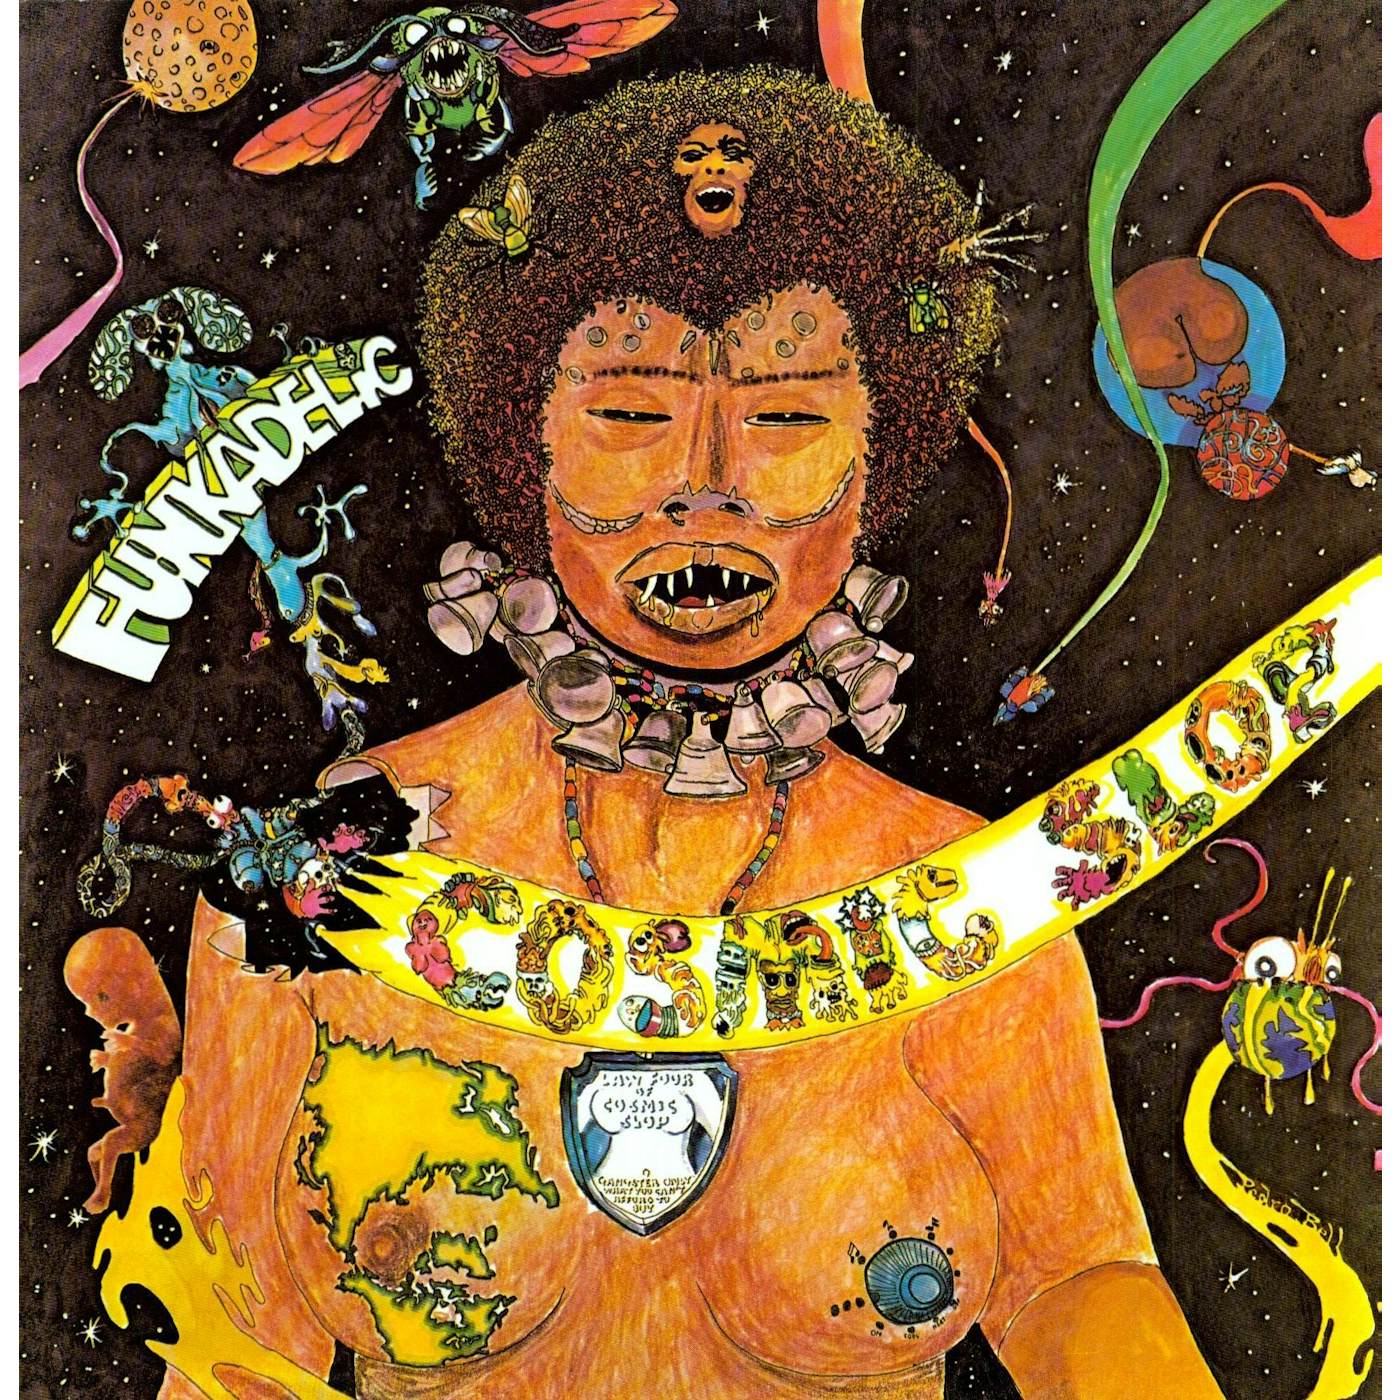 Funkadelic Cosmic Slop Vinyl Record